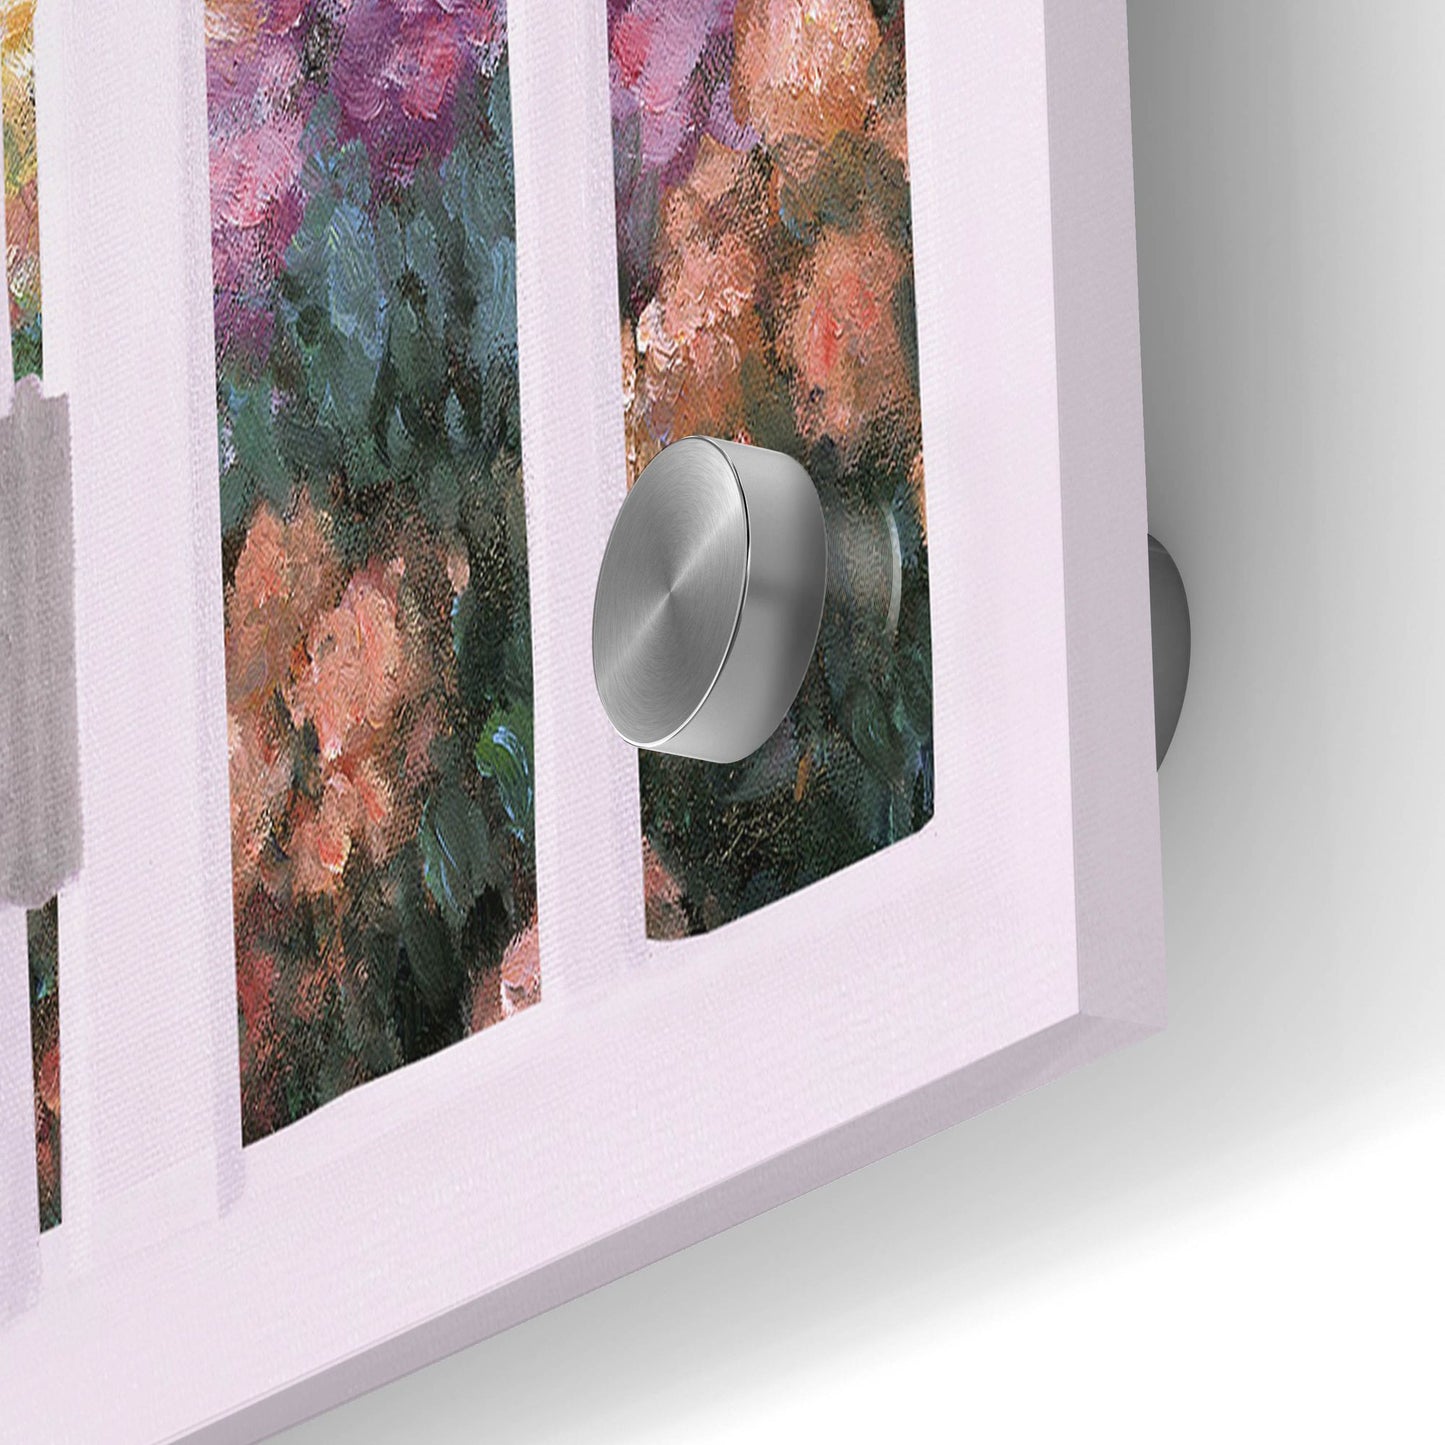 Epic Art ' Springtime Symphony Door' by Diane Romanello, Acrylic Glass Wall Art,36x24